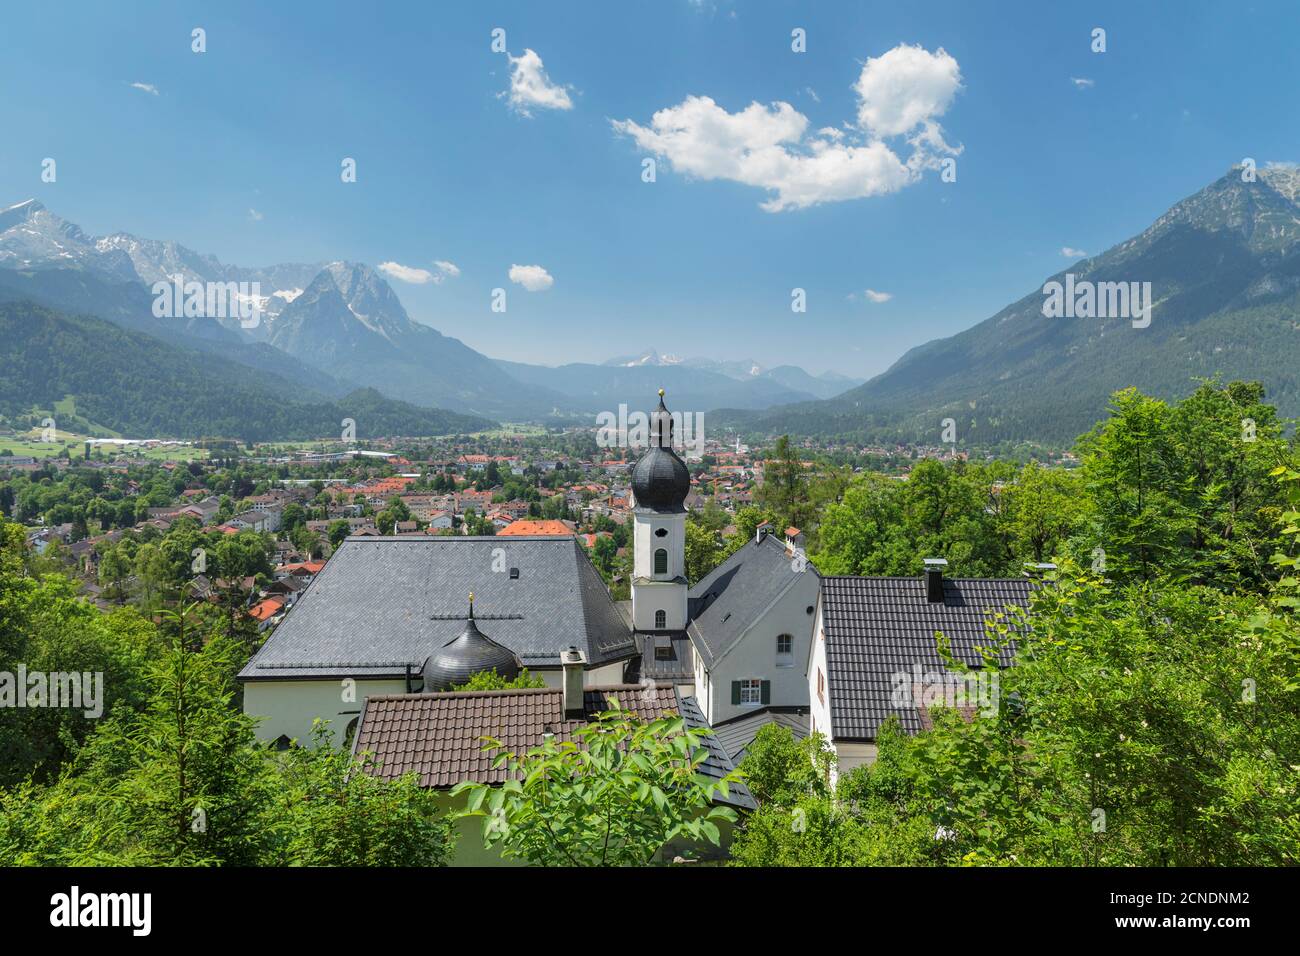 Vista dalla chiesa del pellegrinaggio di Sant'Anton al Monte Kramer, Alpi Bavaresi, Garmisch-Partenkirchen, Werdenfelser Land, alta Baviera, Germania, Europa Foto Stock